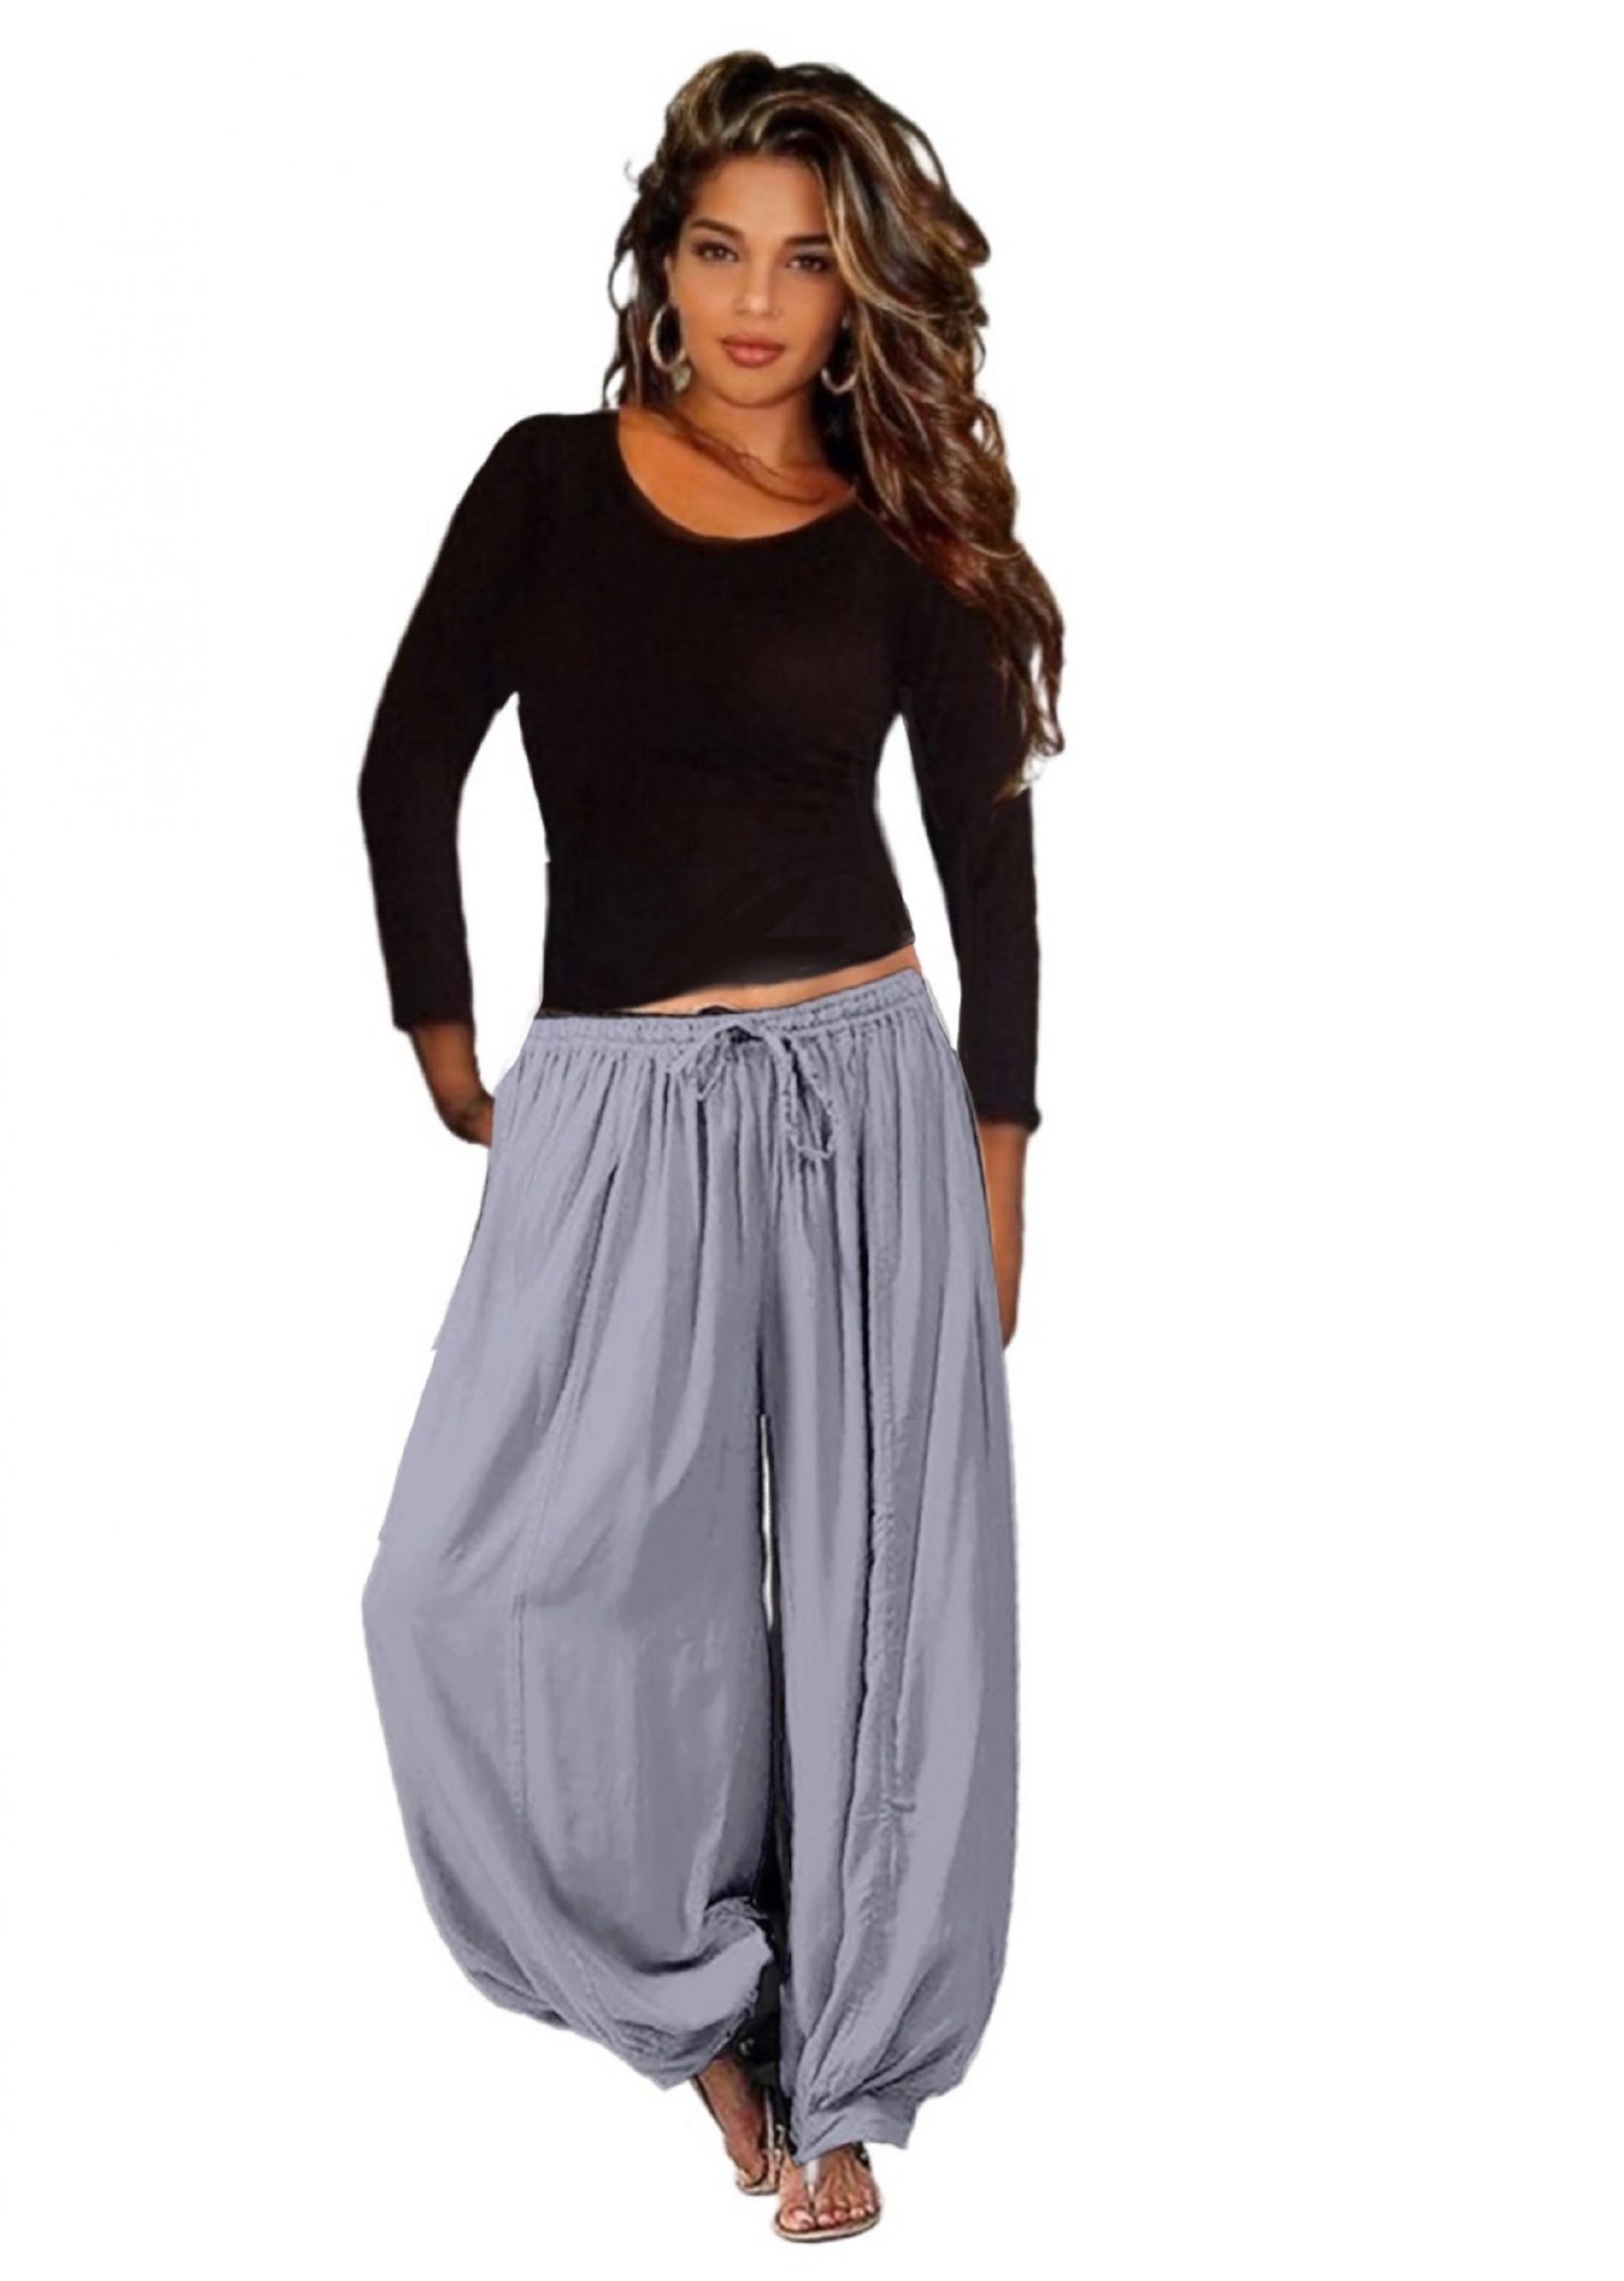 nsendm Unisex Pants Adult Harem Yoga Pants for Women Elastic Mesh